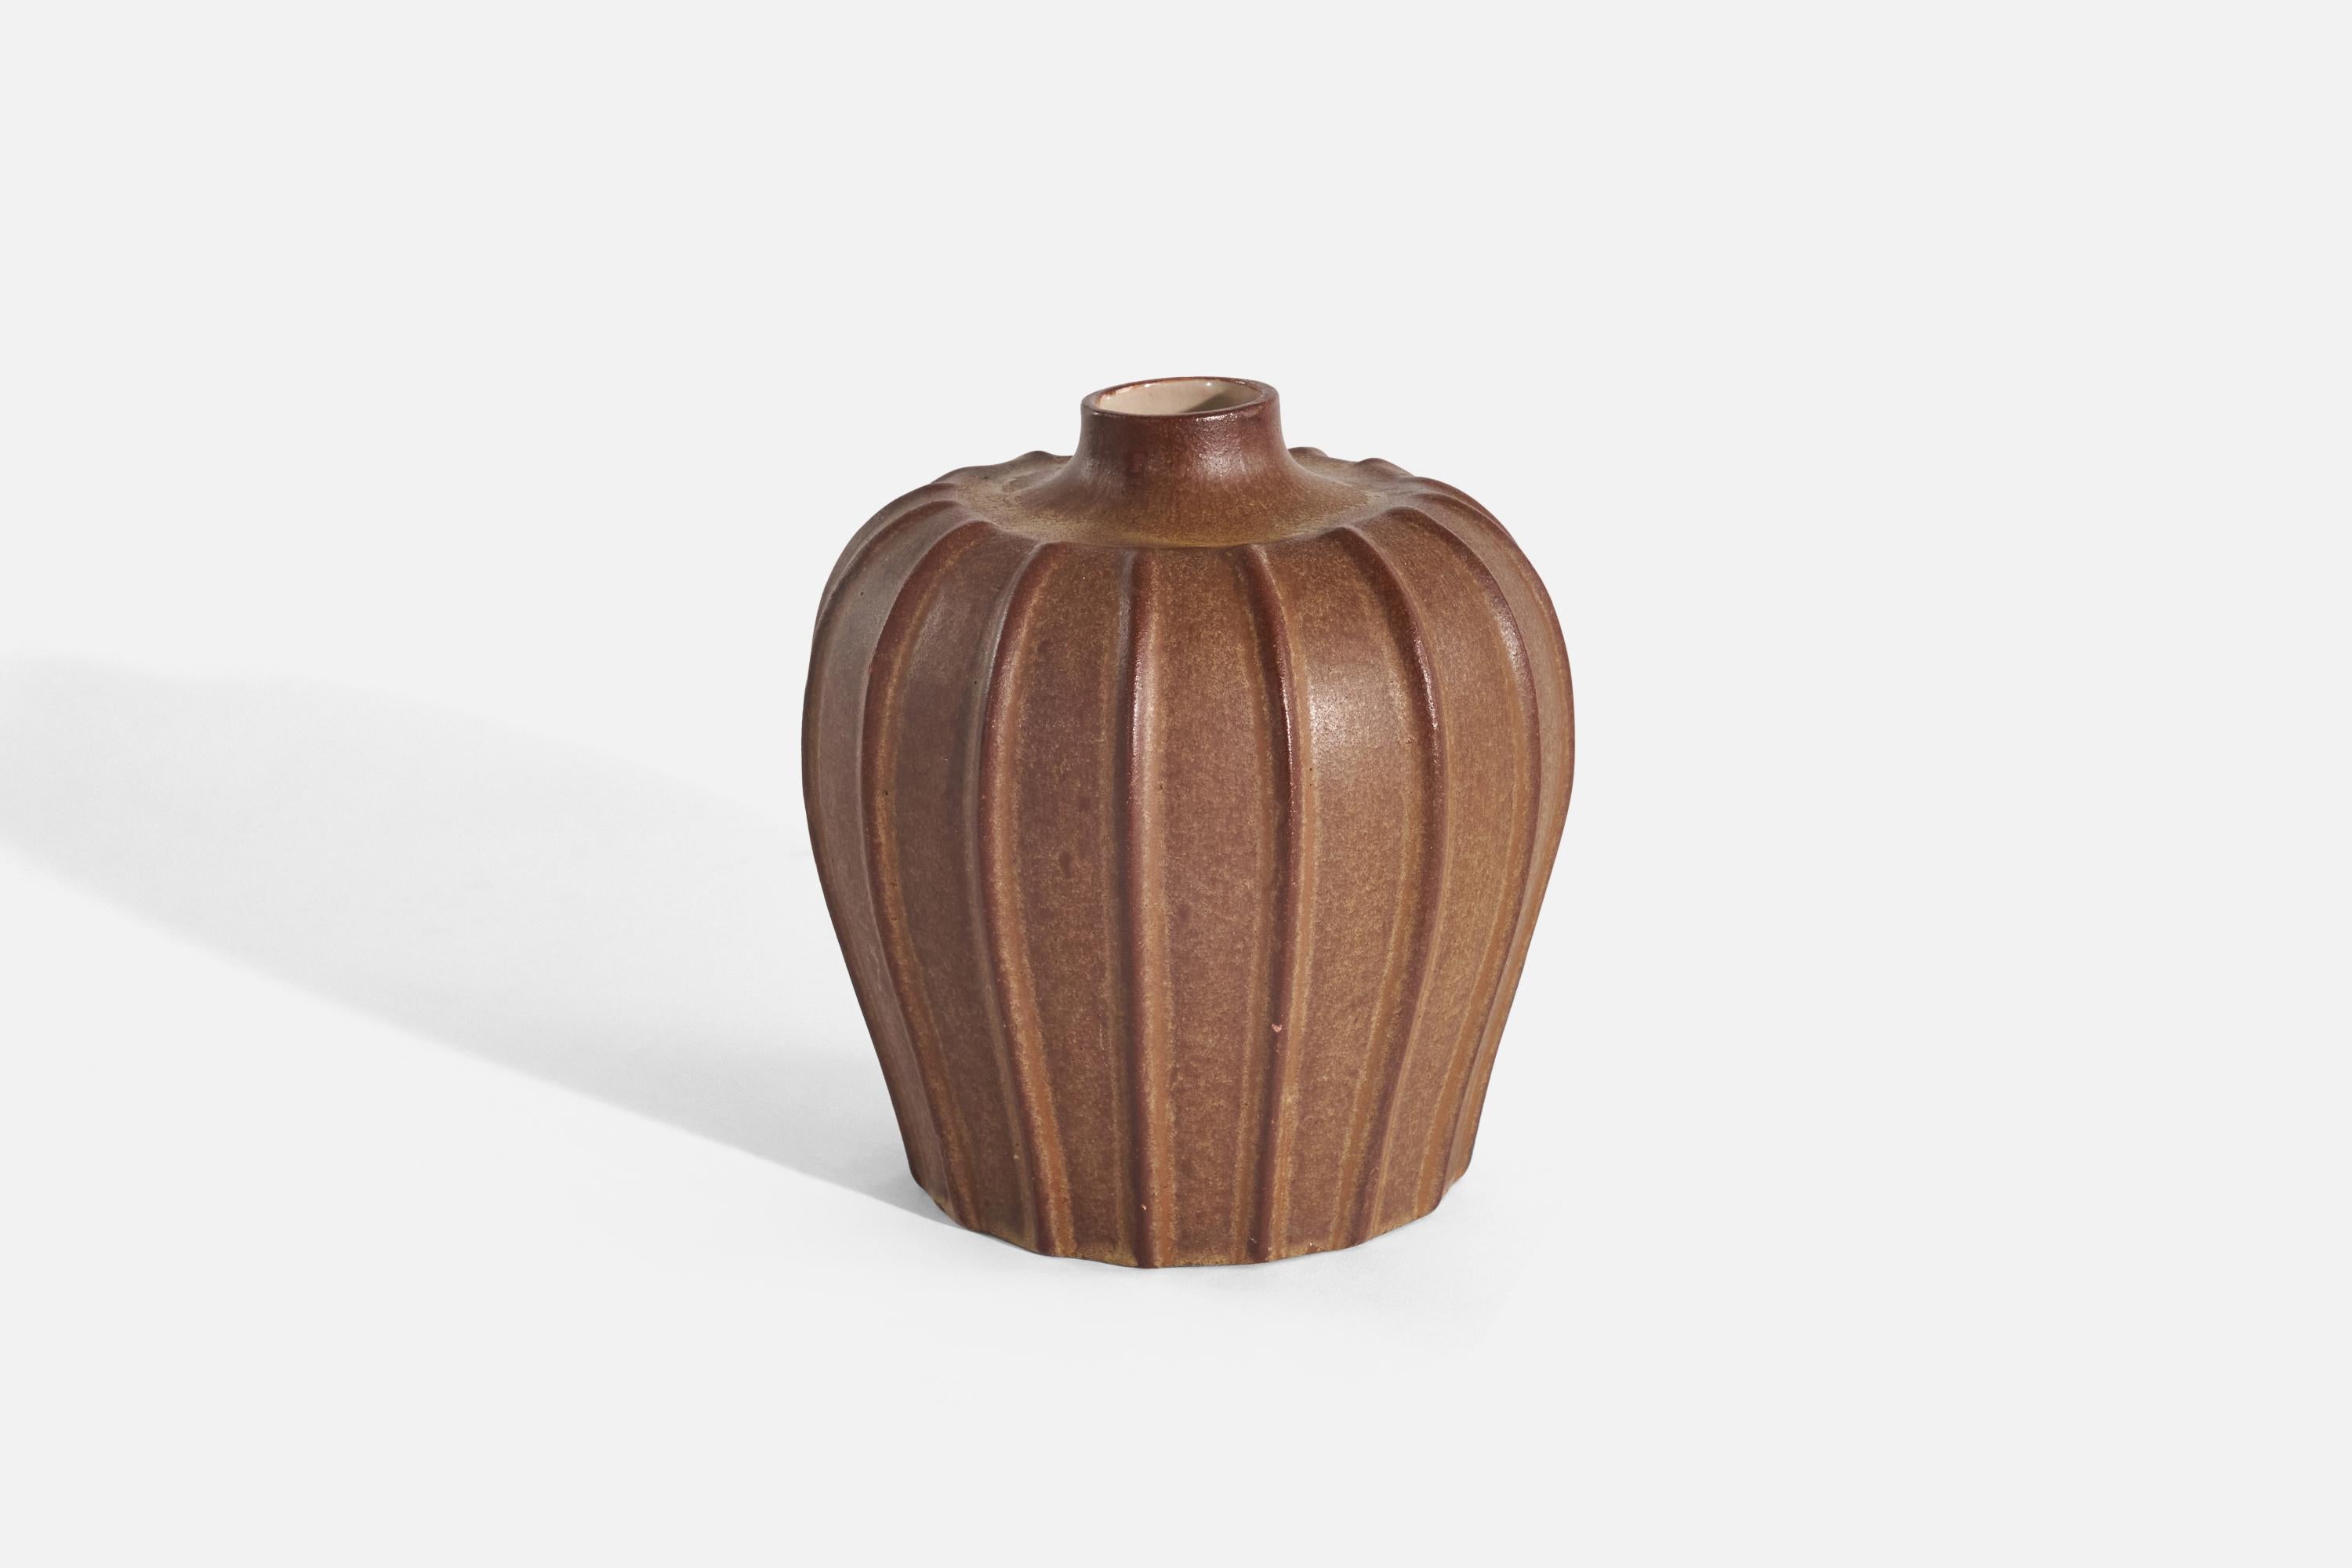 A brown, glazed earthenware vase designed by Vicke Lindstrand and produced by Upsala-Ekeby, Sweden, c. 1940s. 

